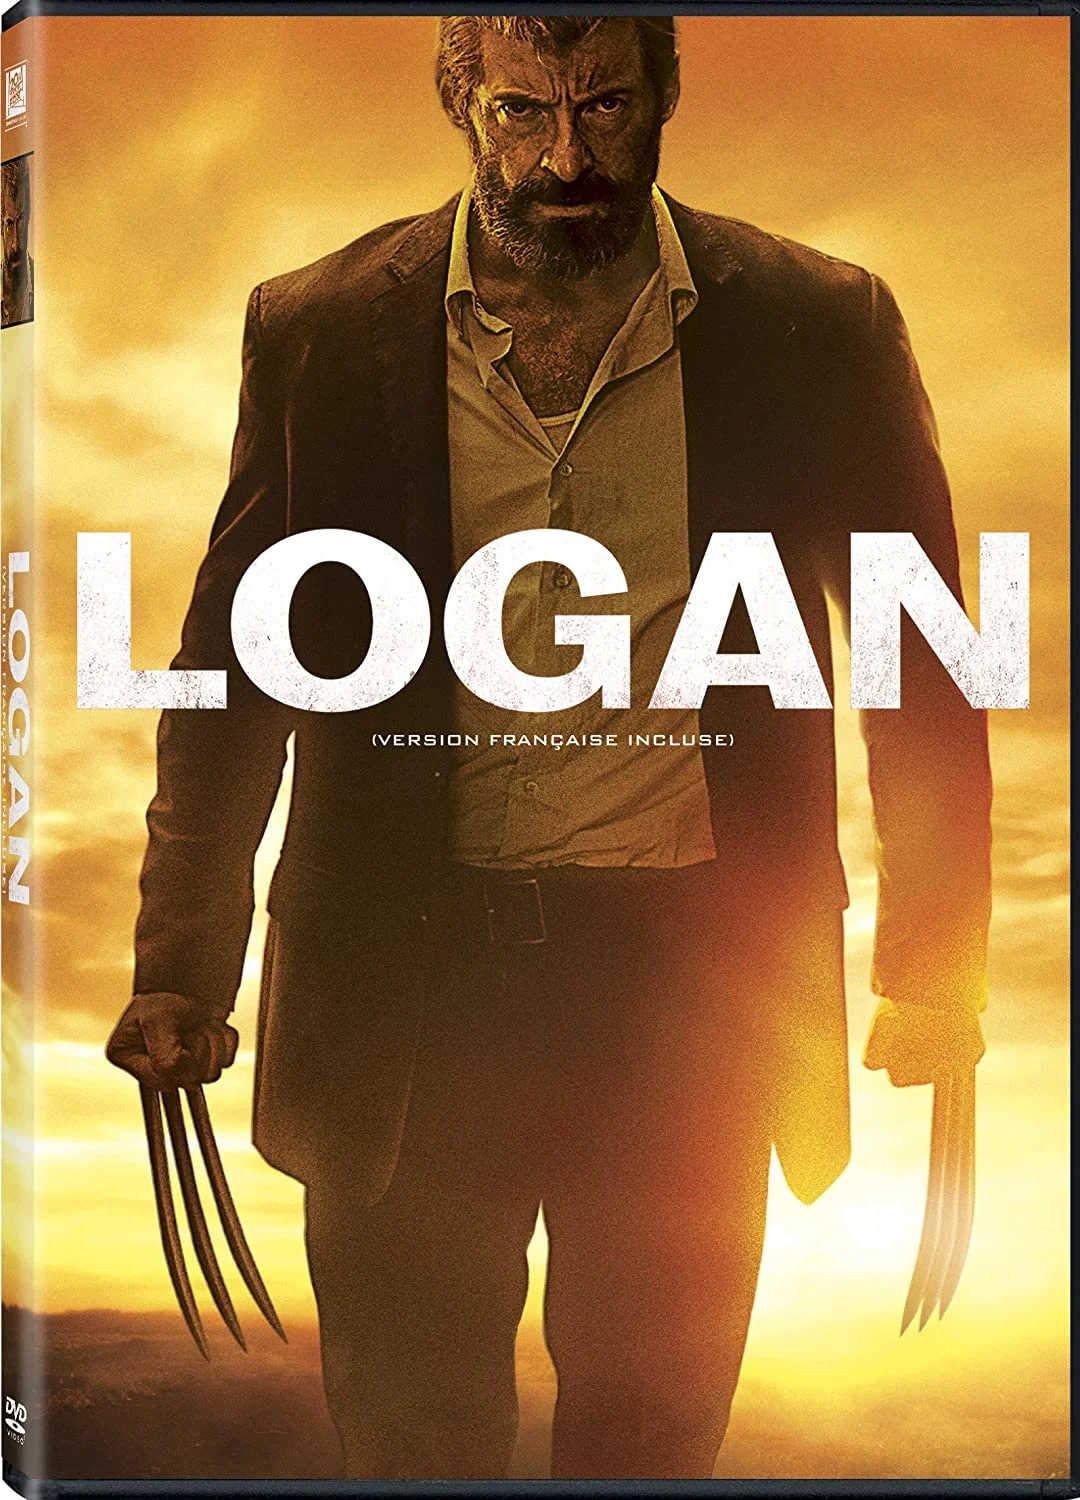 Logan (DVD) on MovieShack